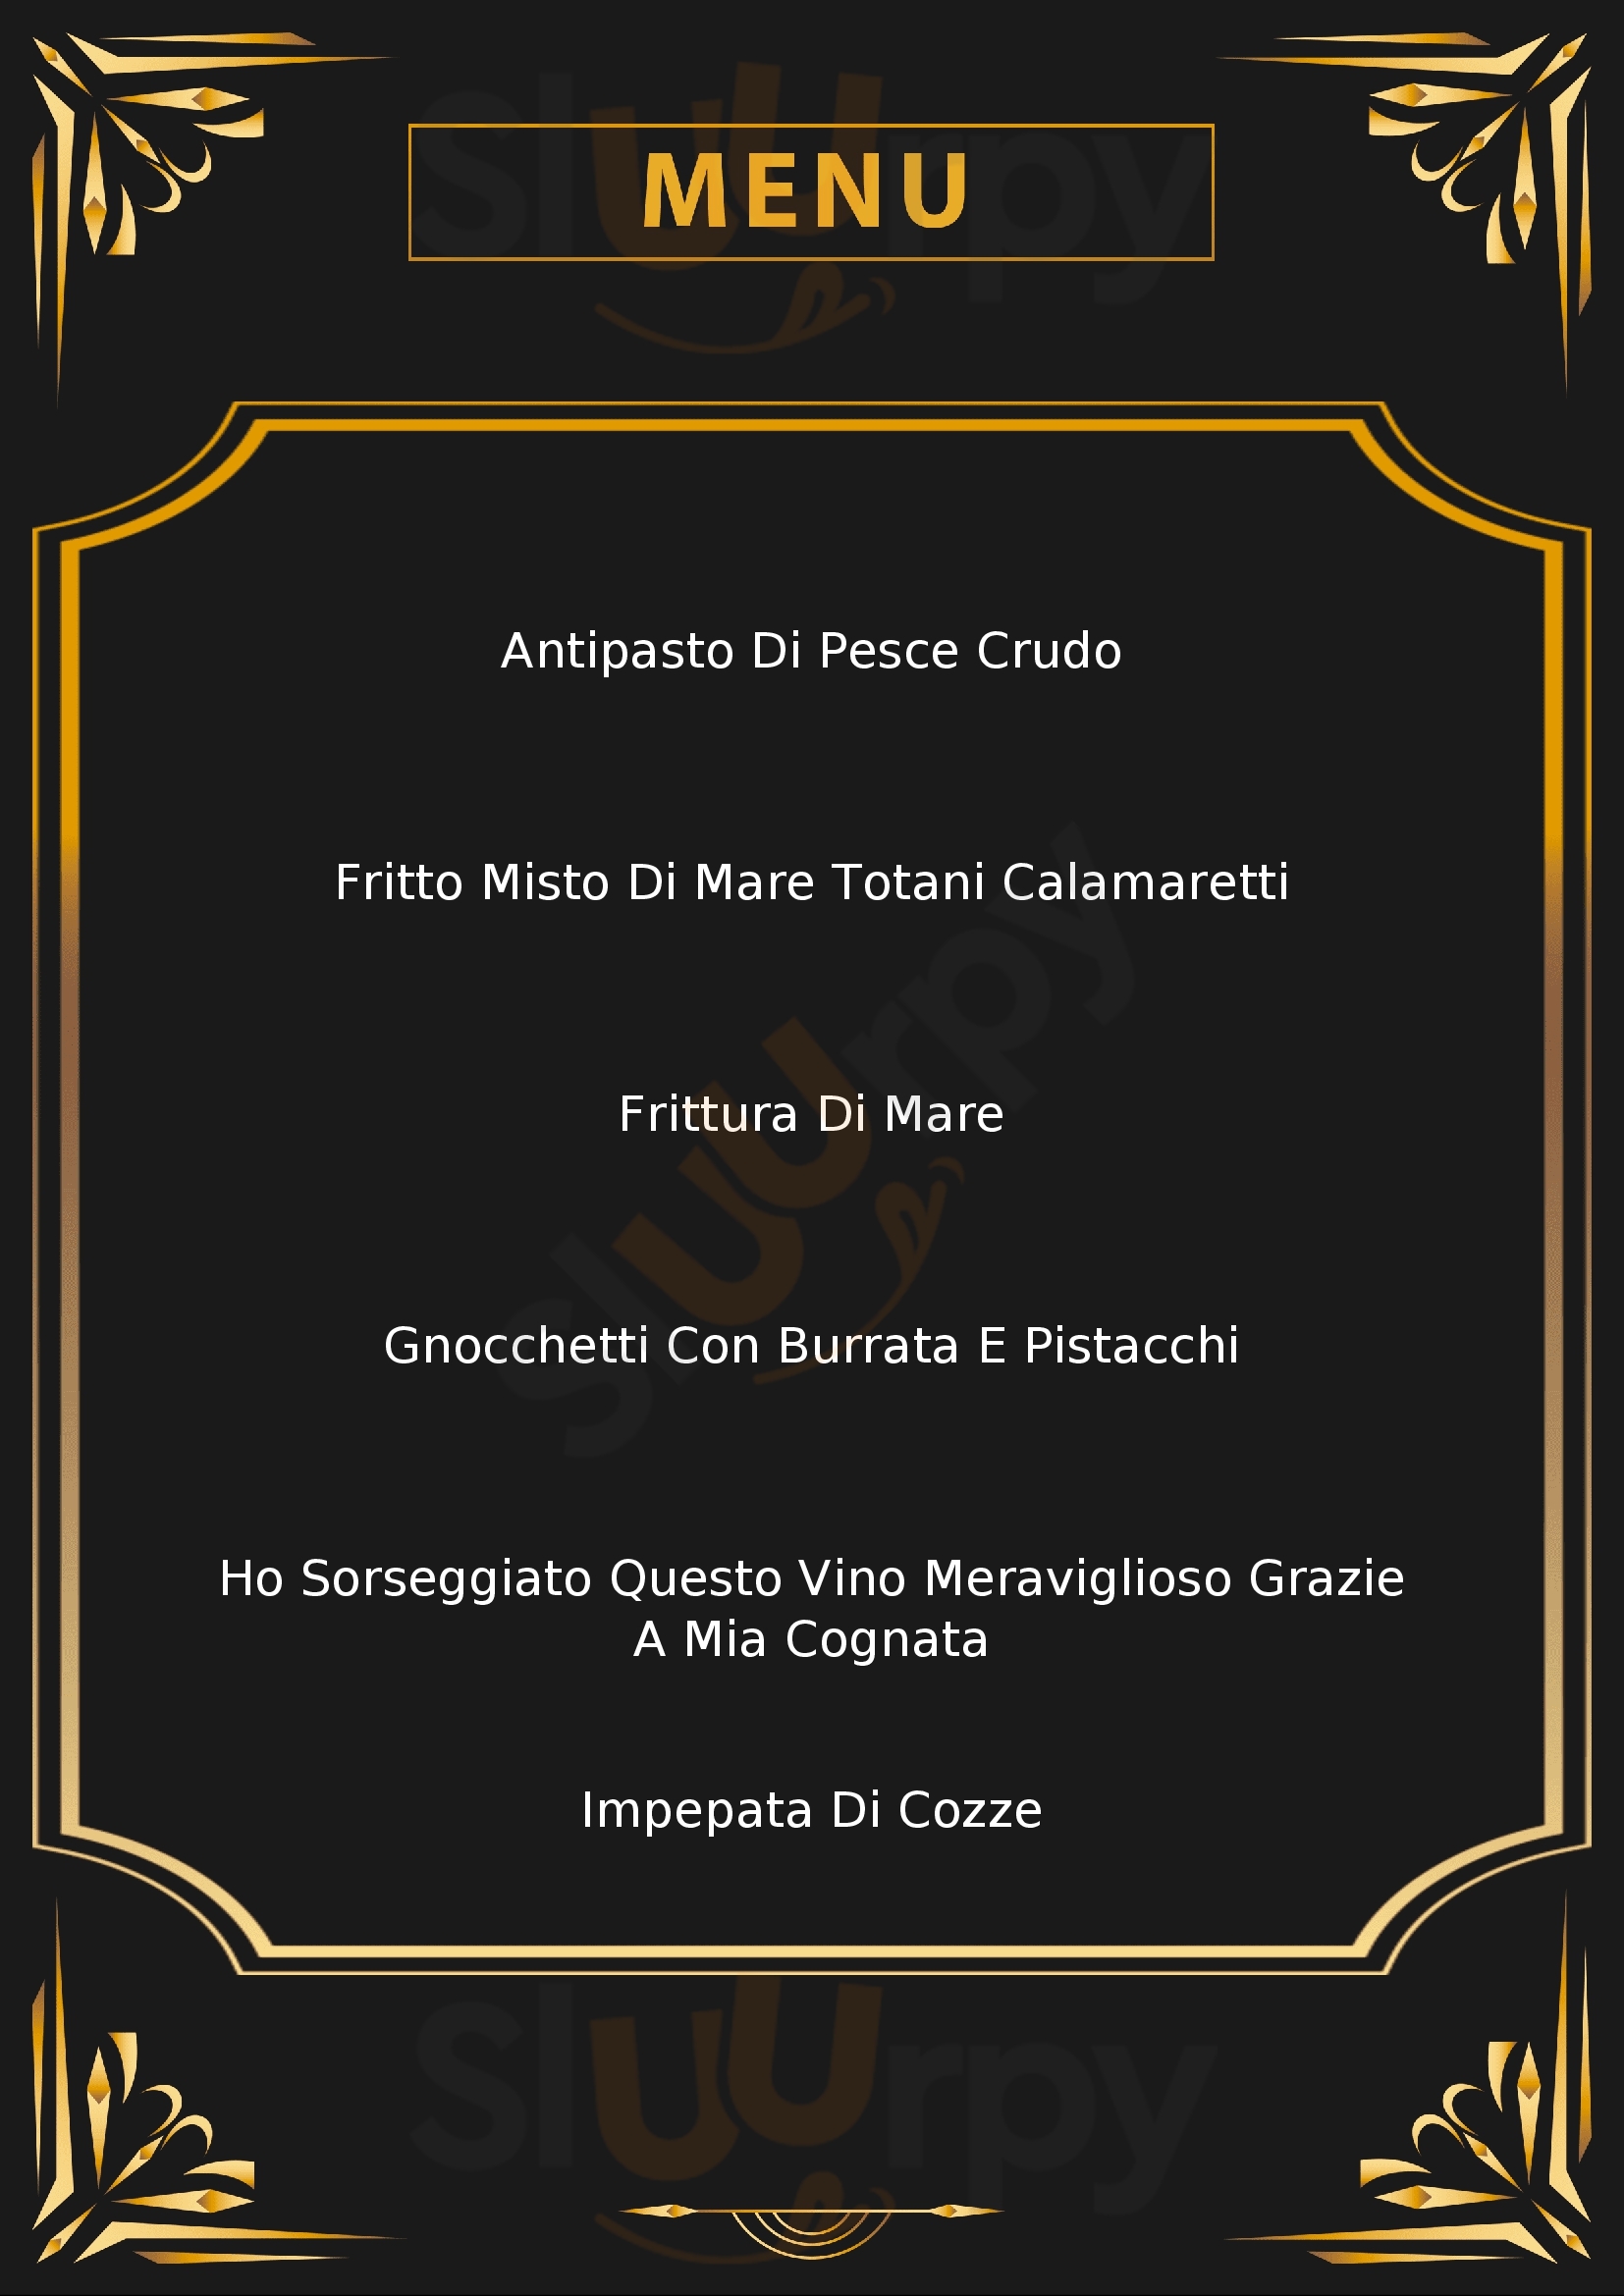 Elite Restaurant Cetraro menù 1 pagina